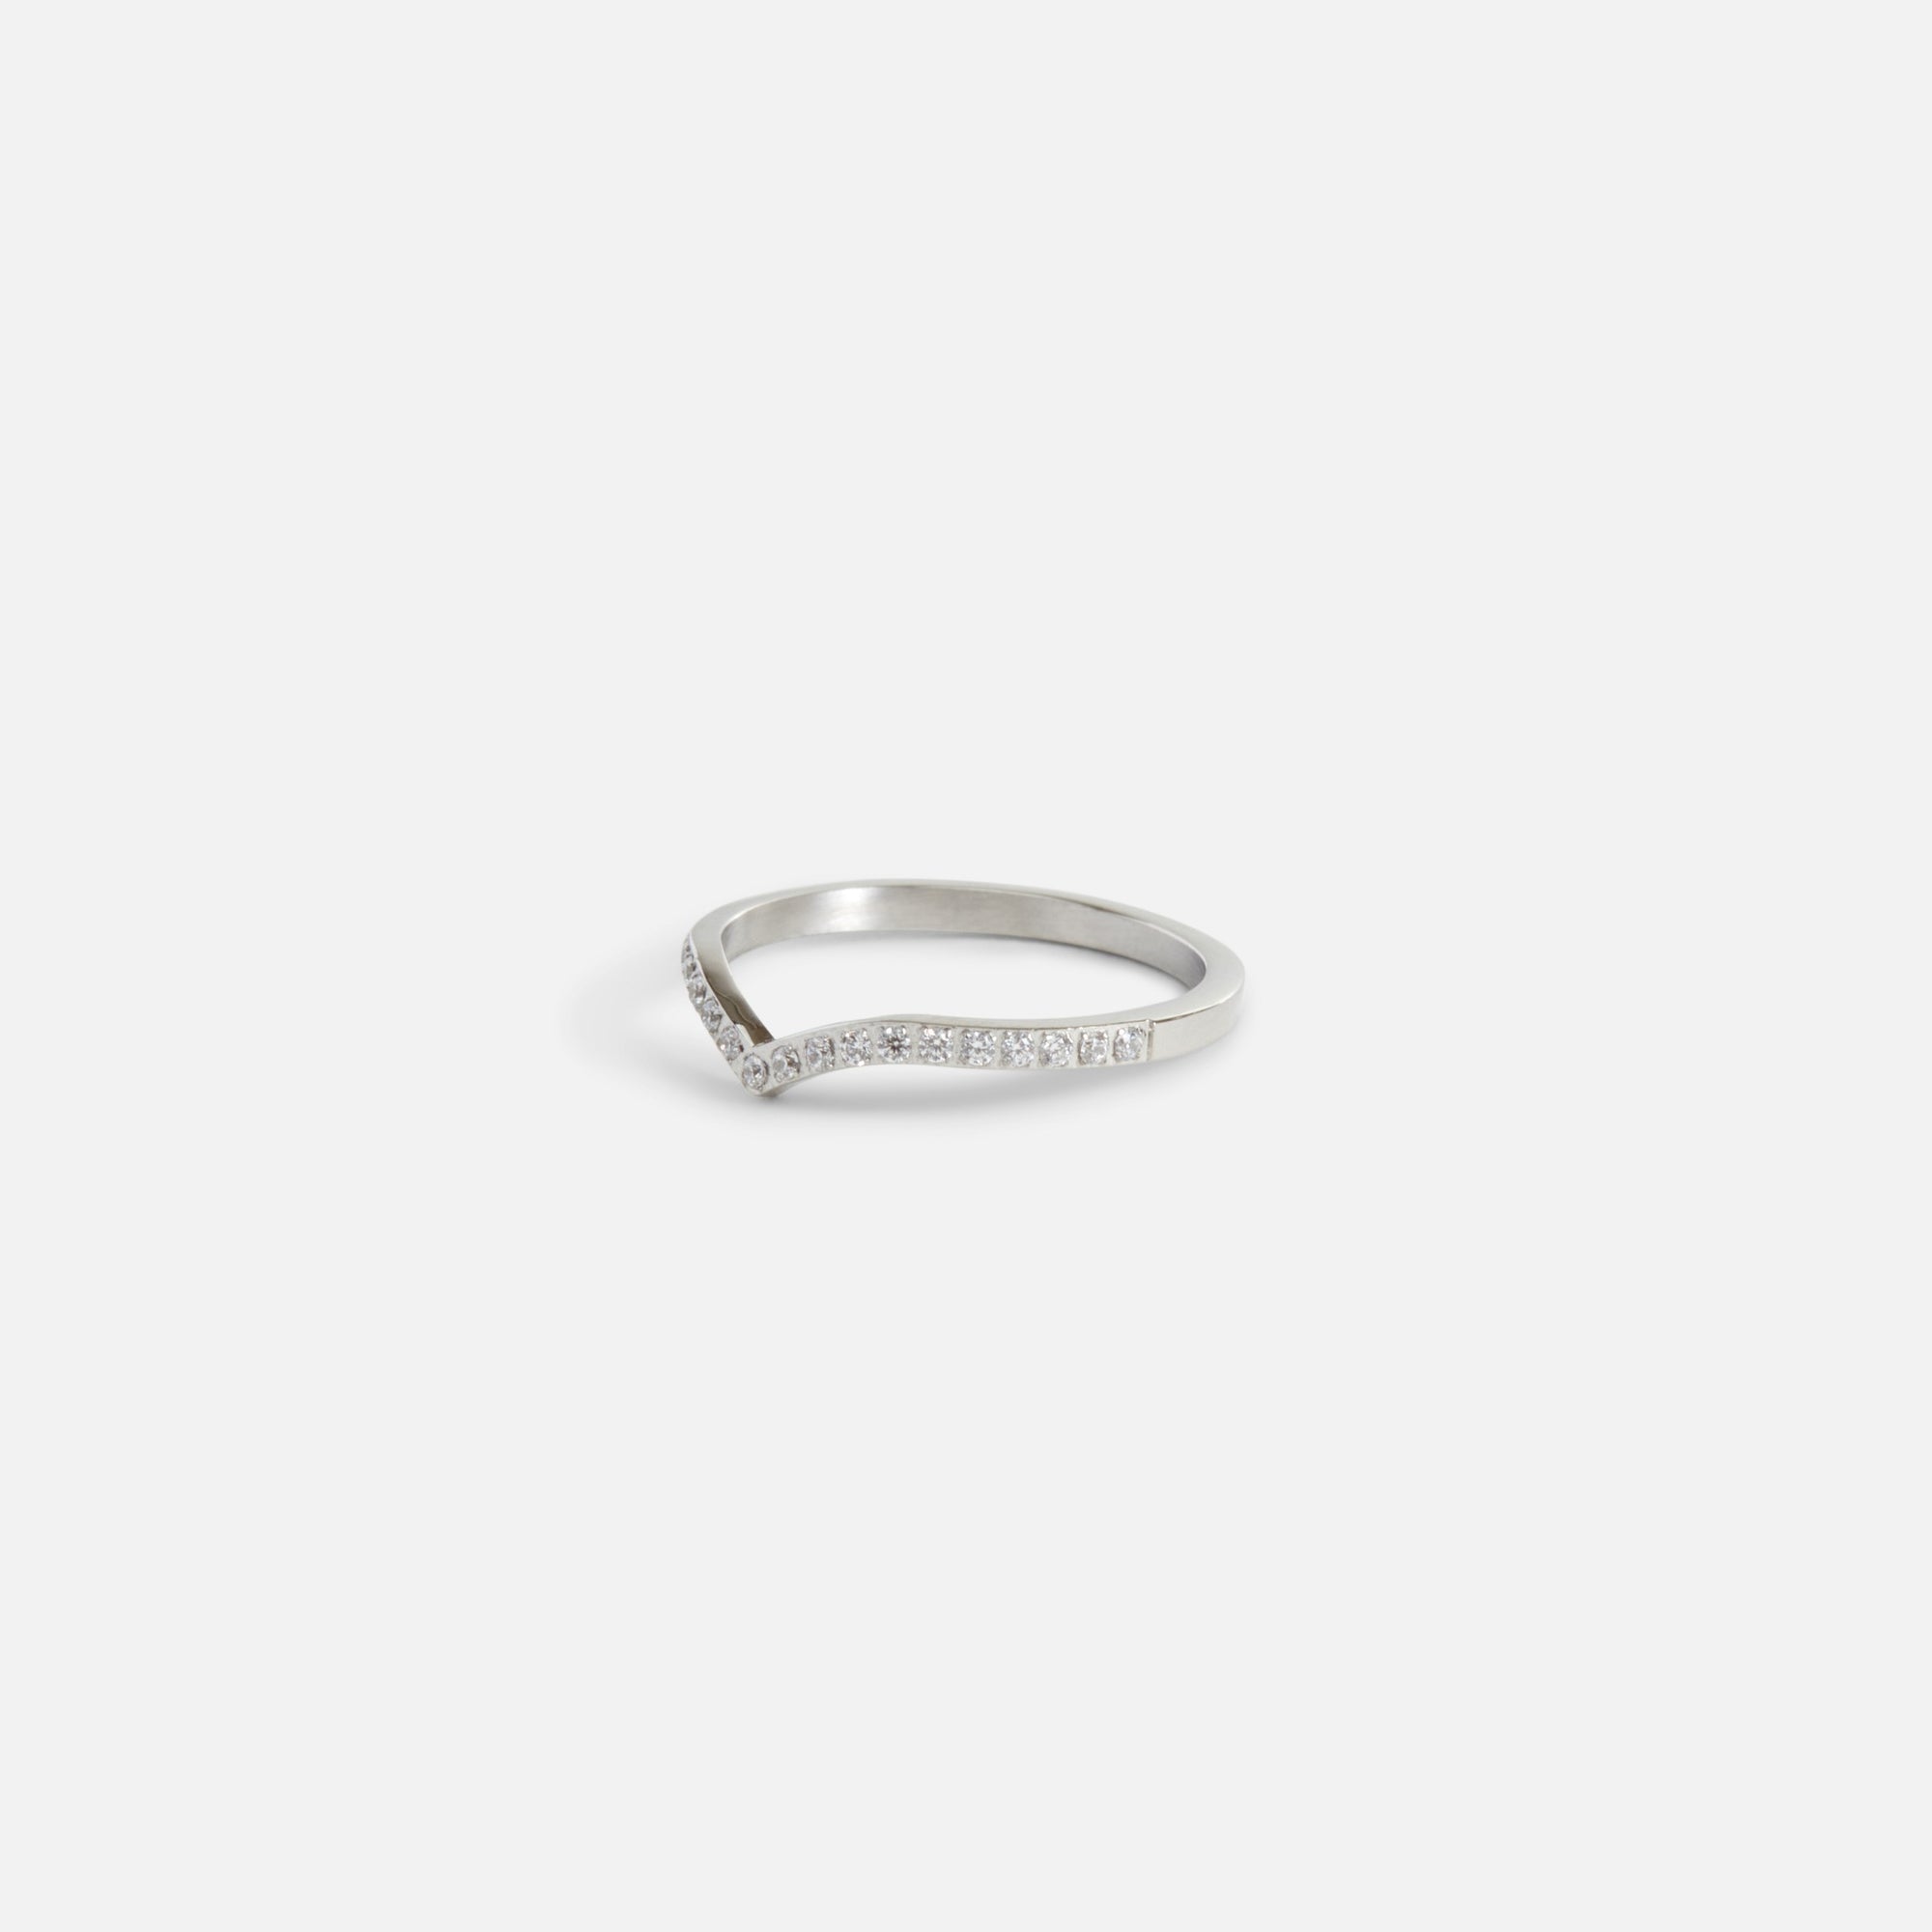 Set of silver rings v shape in stainless steel